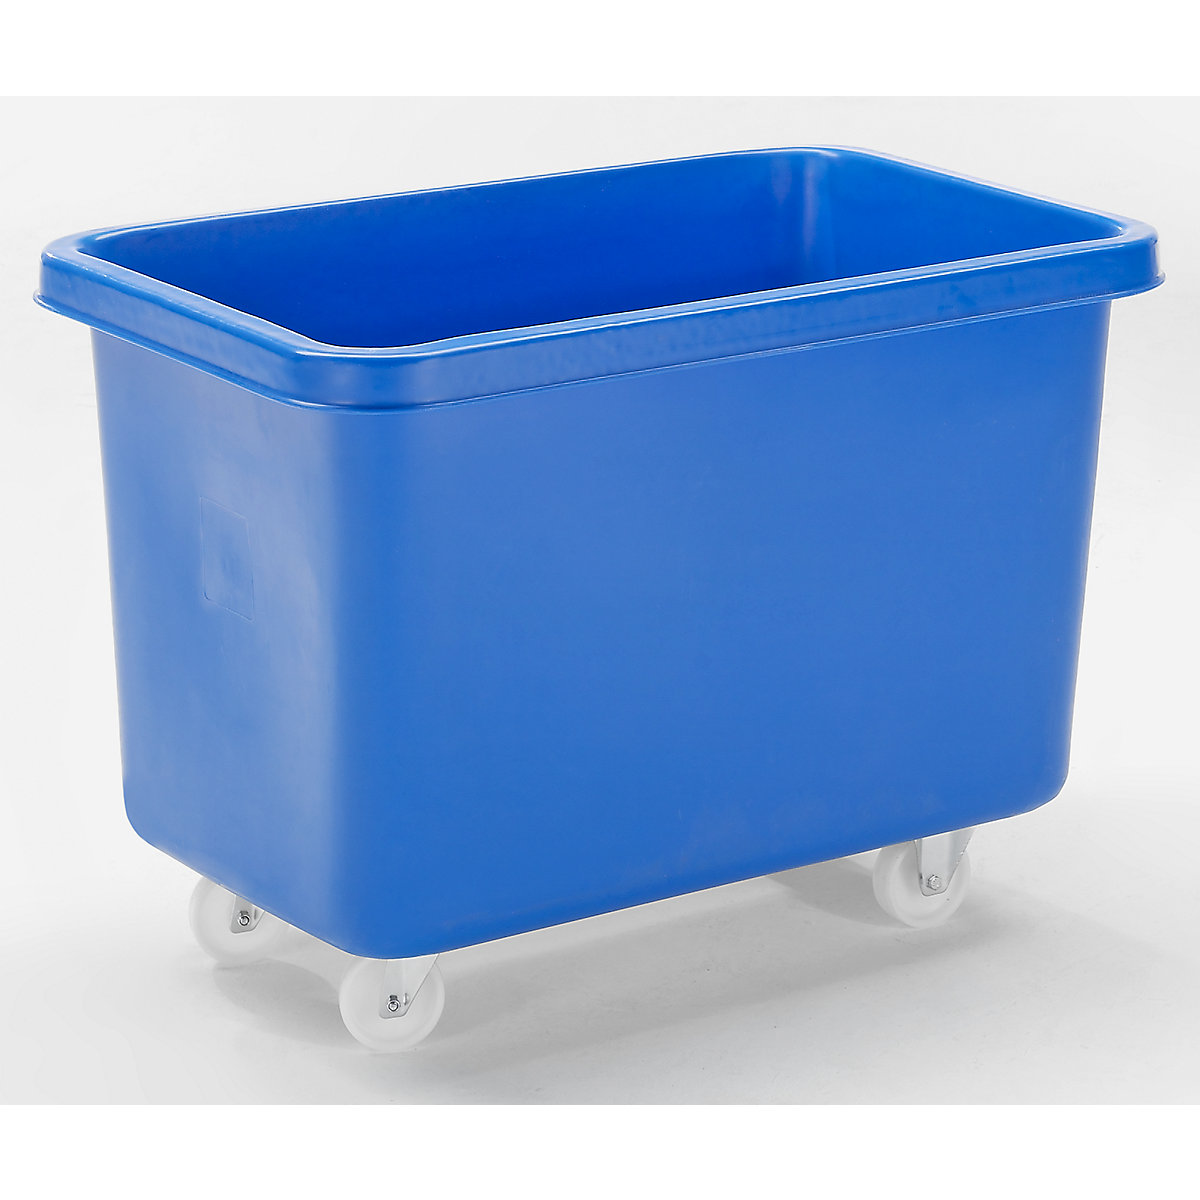 Rechteckbehälter aus Polyethylen, fahrbar, Inhalt 340 l, blau-3